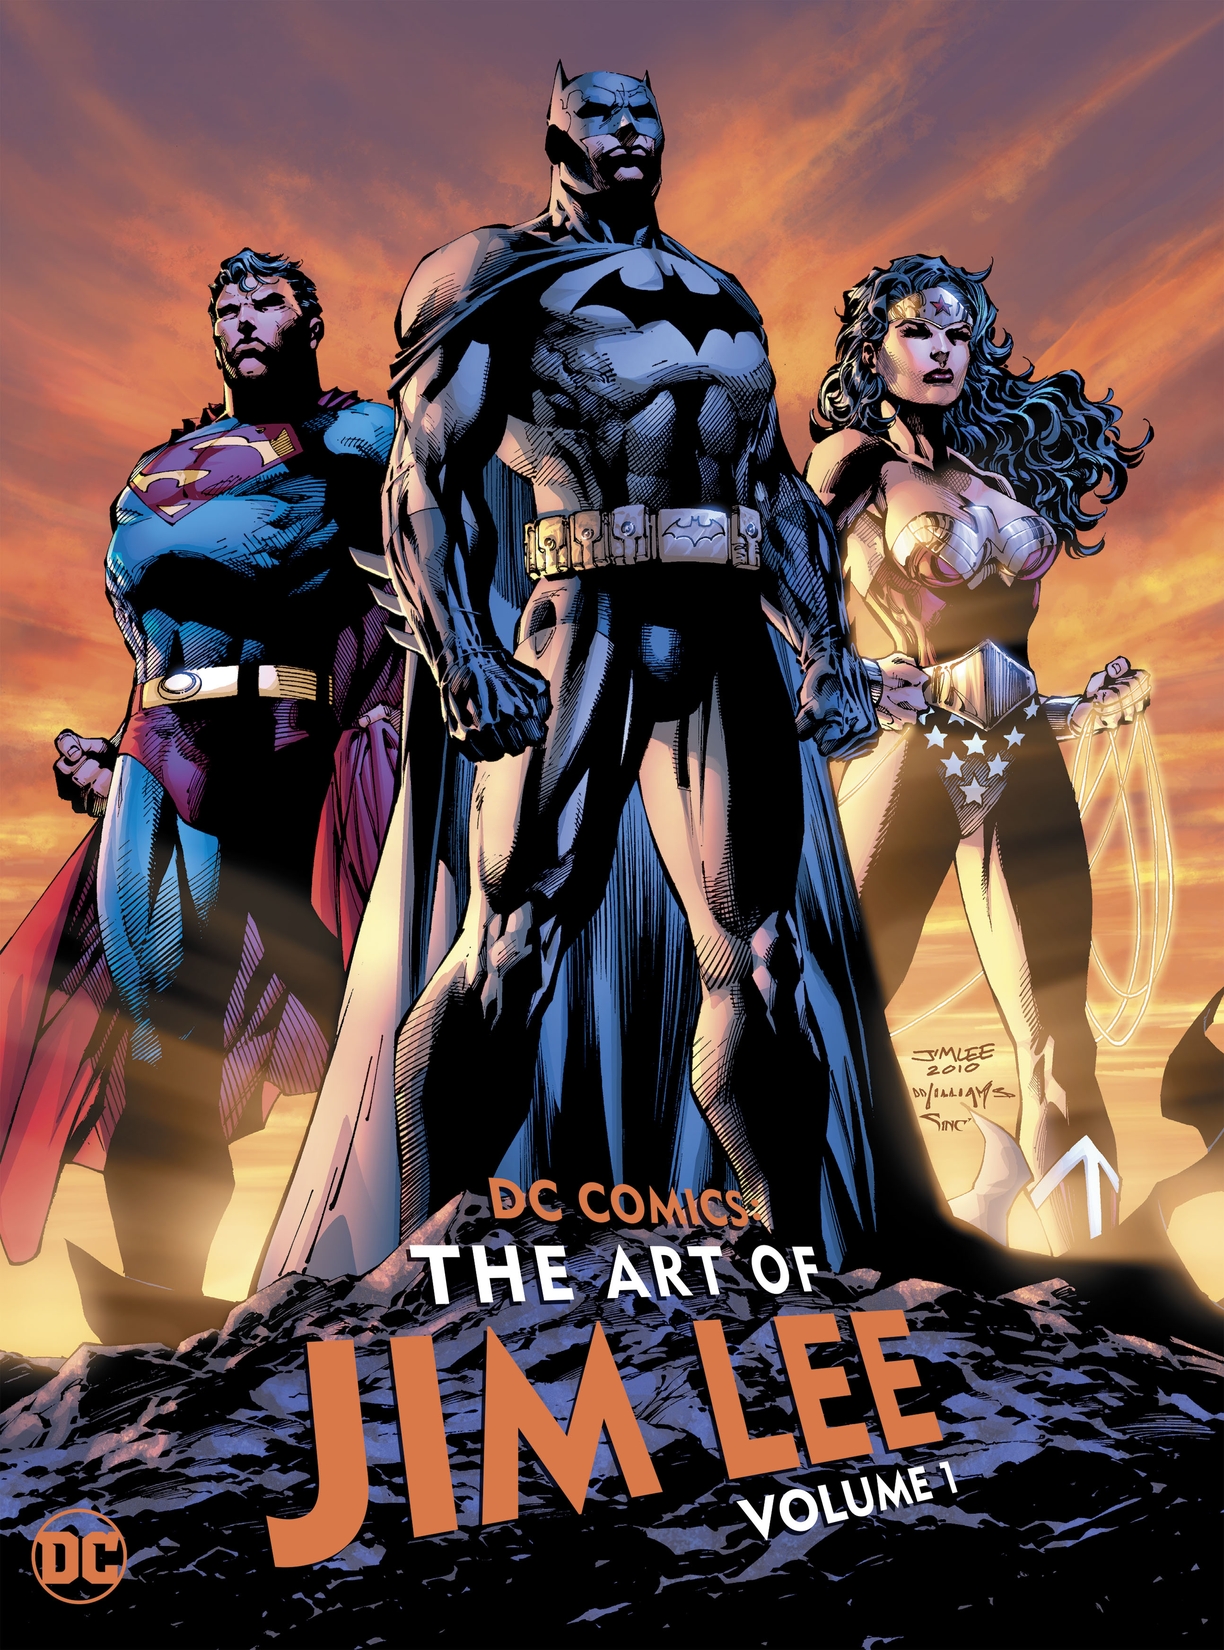 DC Comics: The Art of Jim Lee Vol. 1 preview images